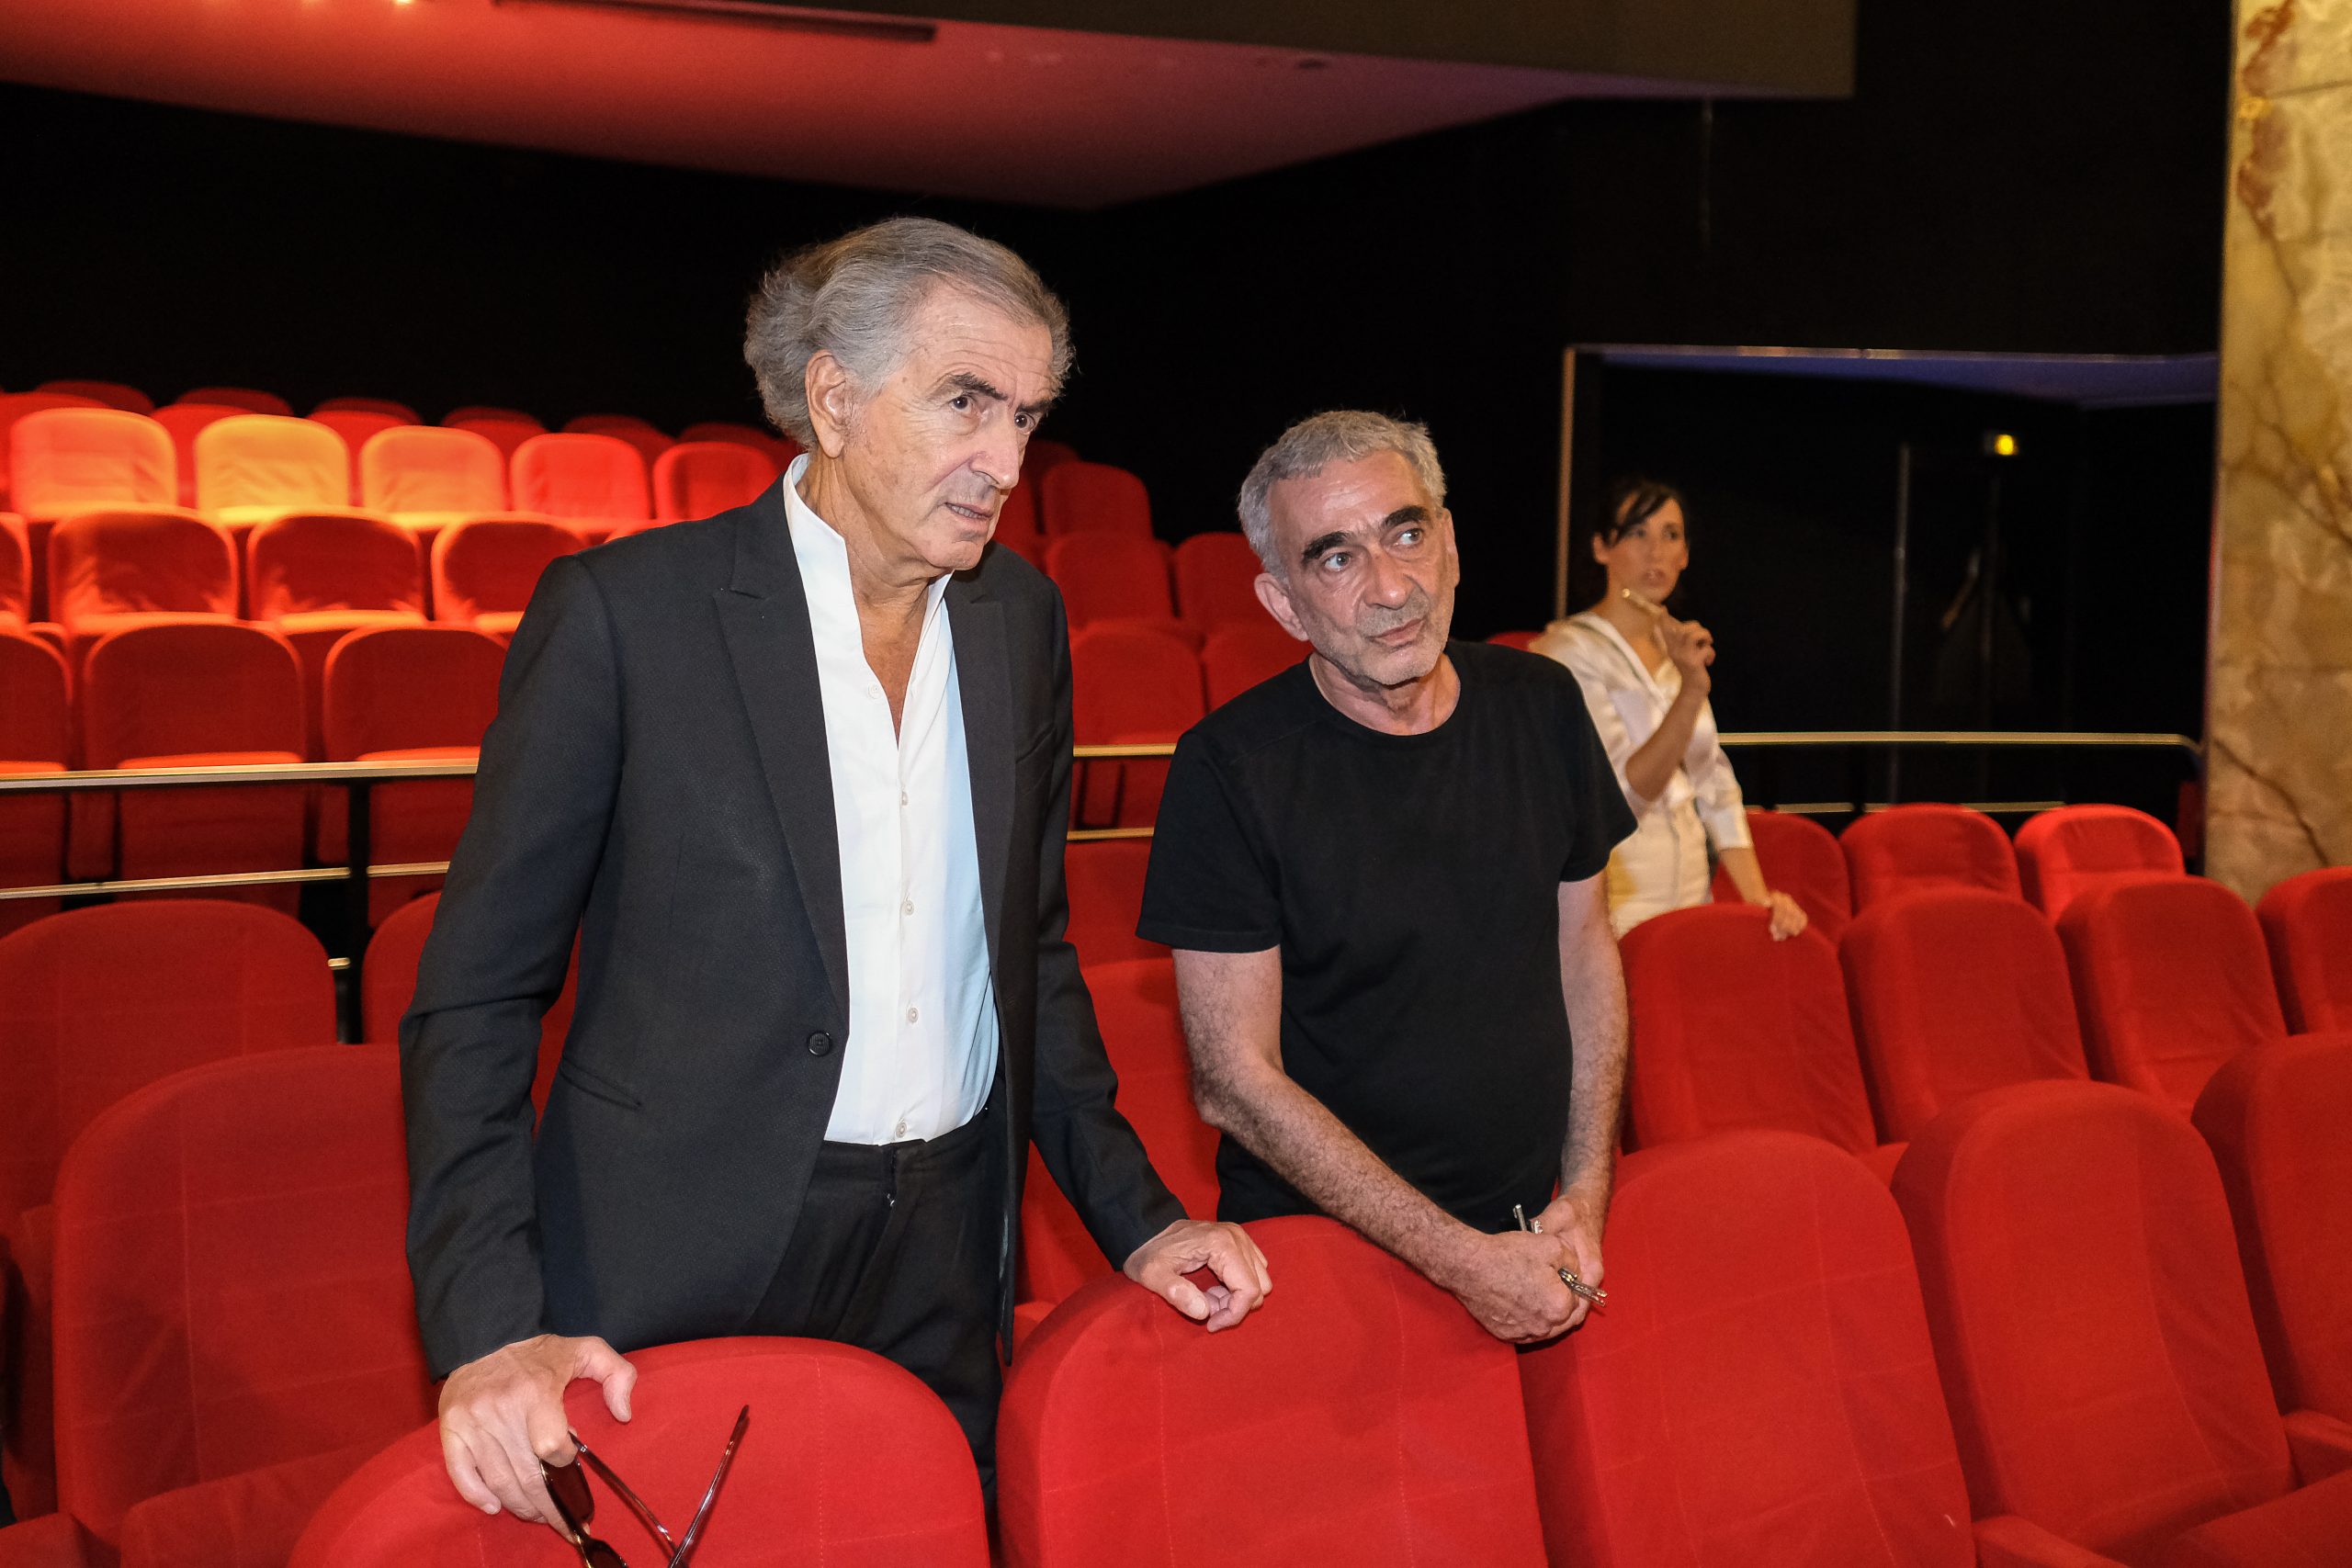 Final checks for Bernard-Henri Lévy before the screening of his film "Why Ukraine", at the Cinema Le Balzac in Paris.